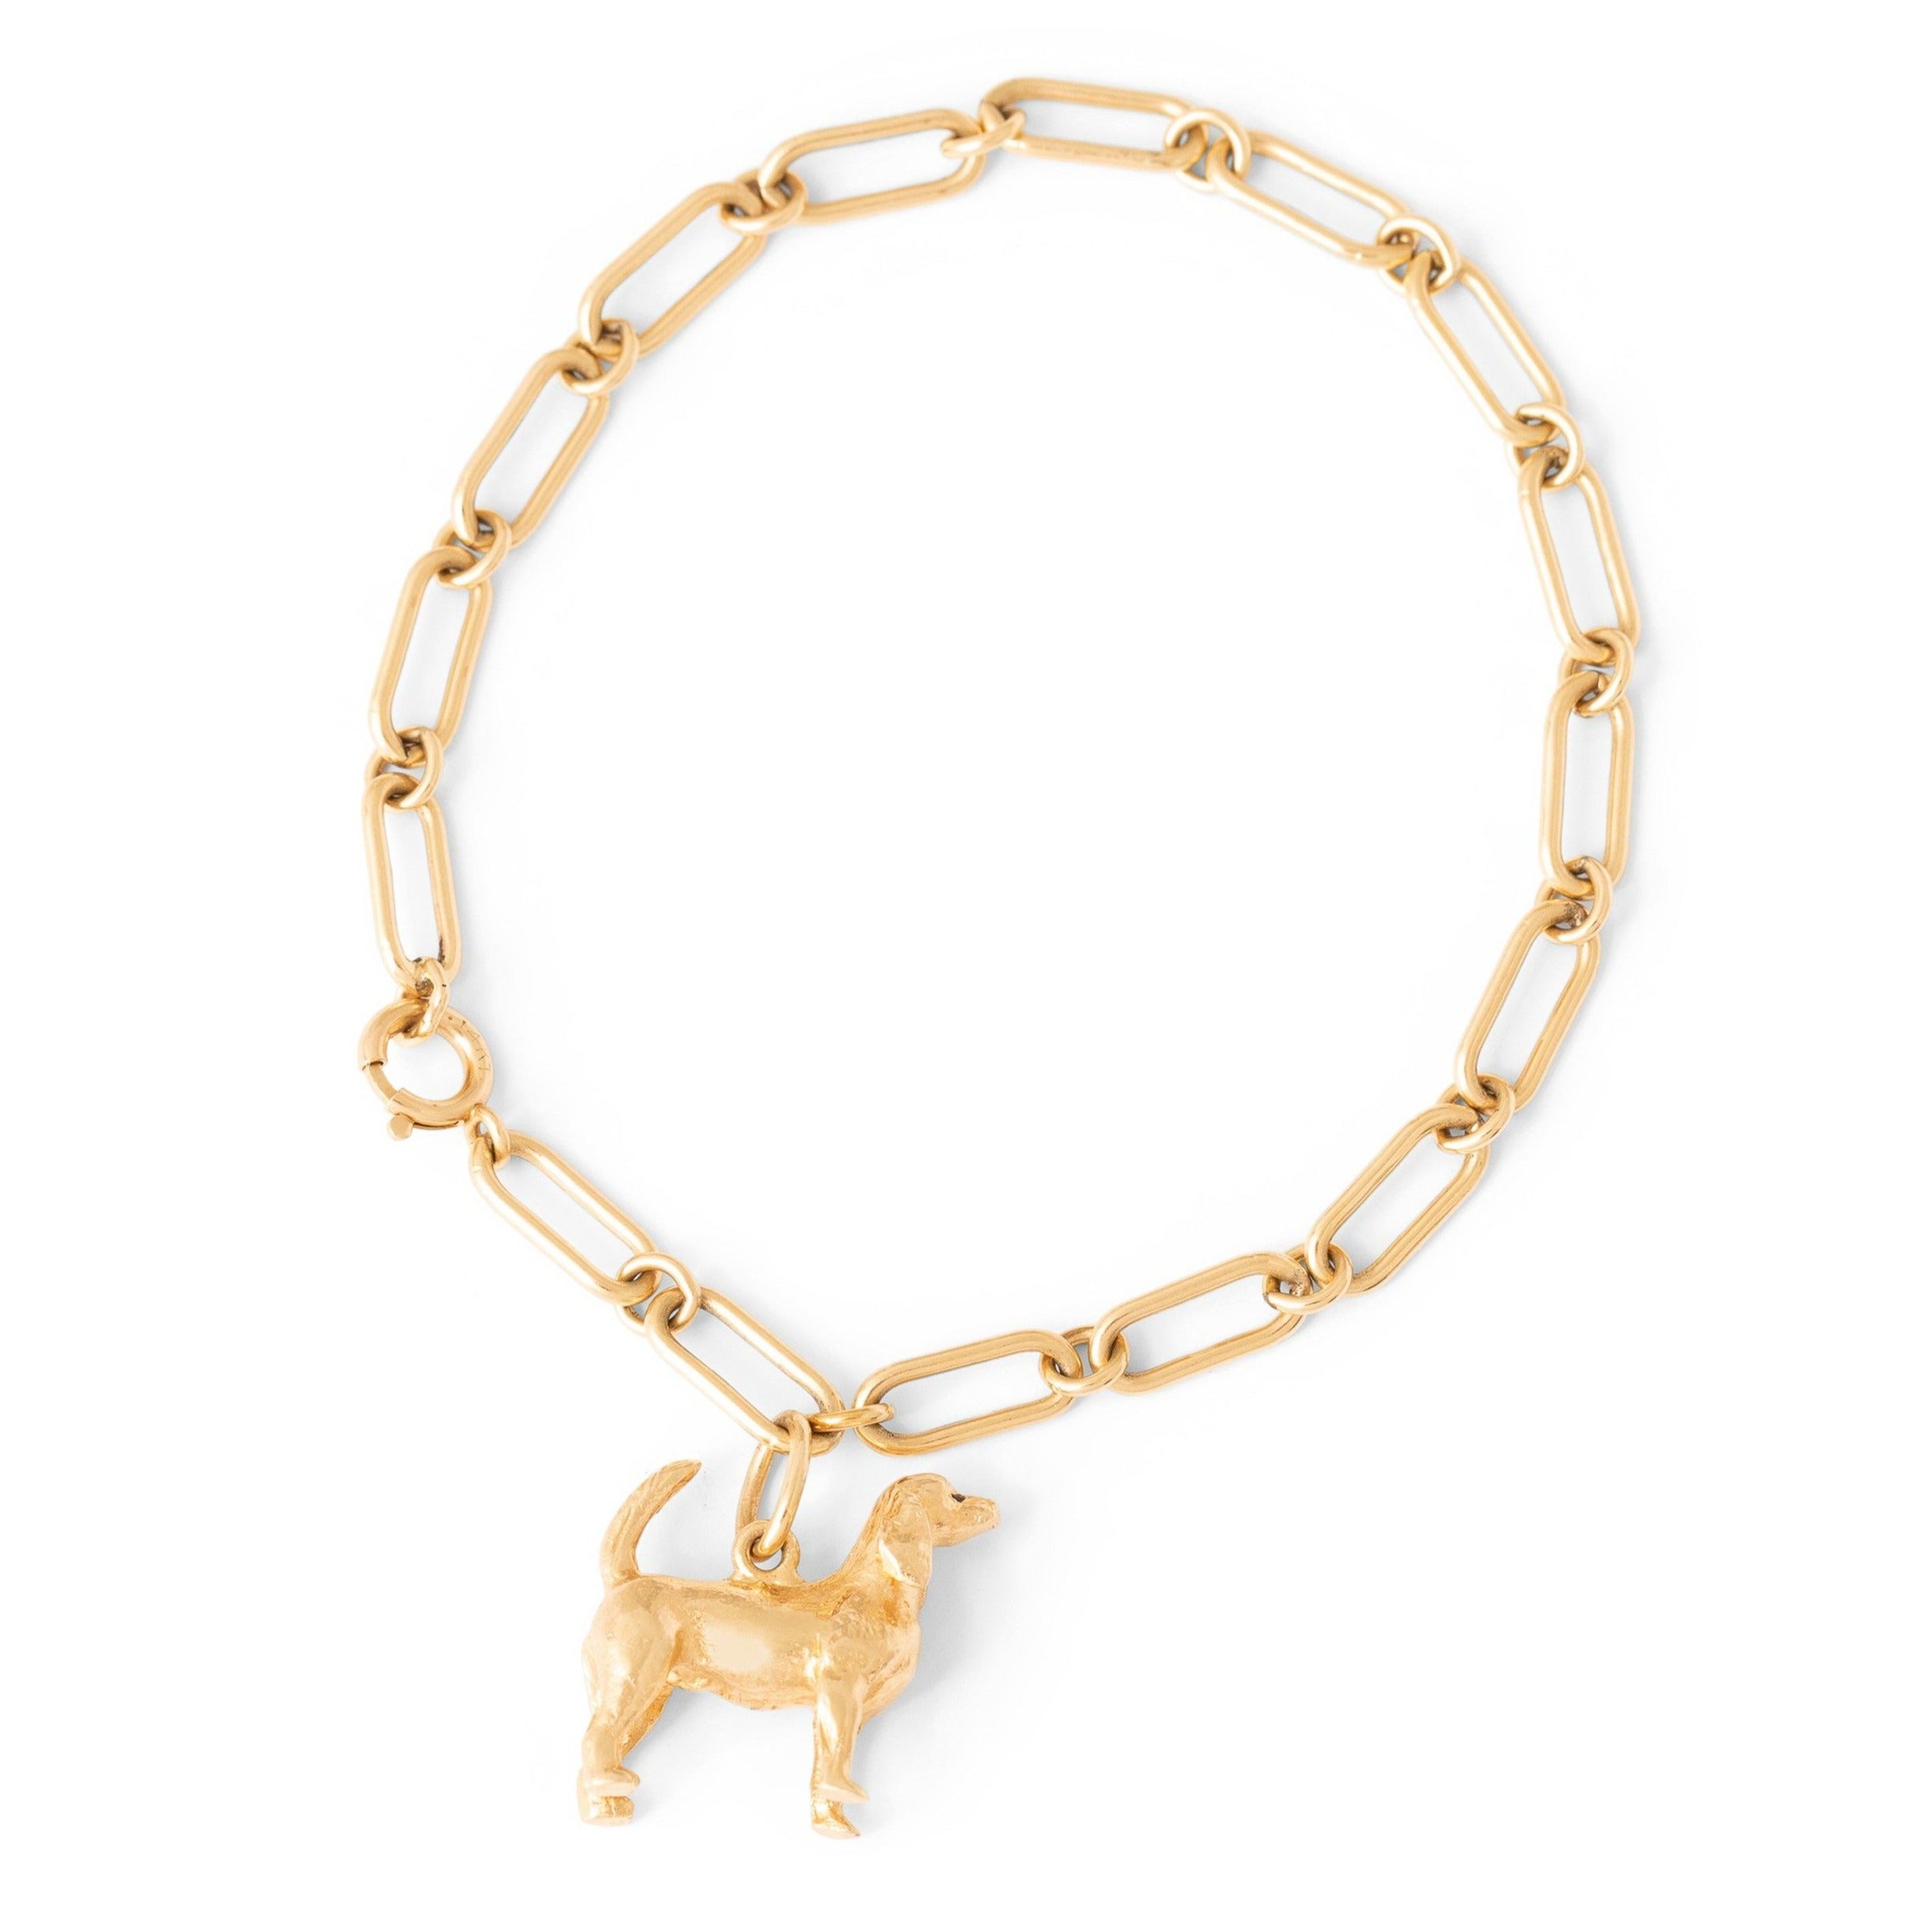 Tiffany Dog Bracelet in Sterling Silver - Bracelets/Bangles - Jewellery